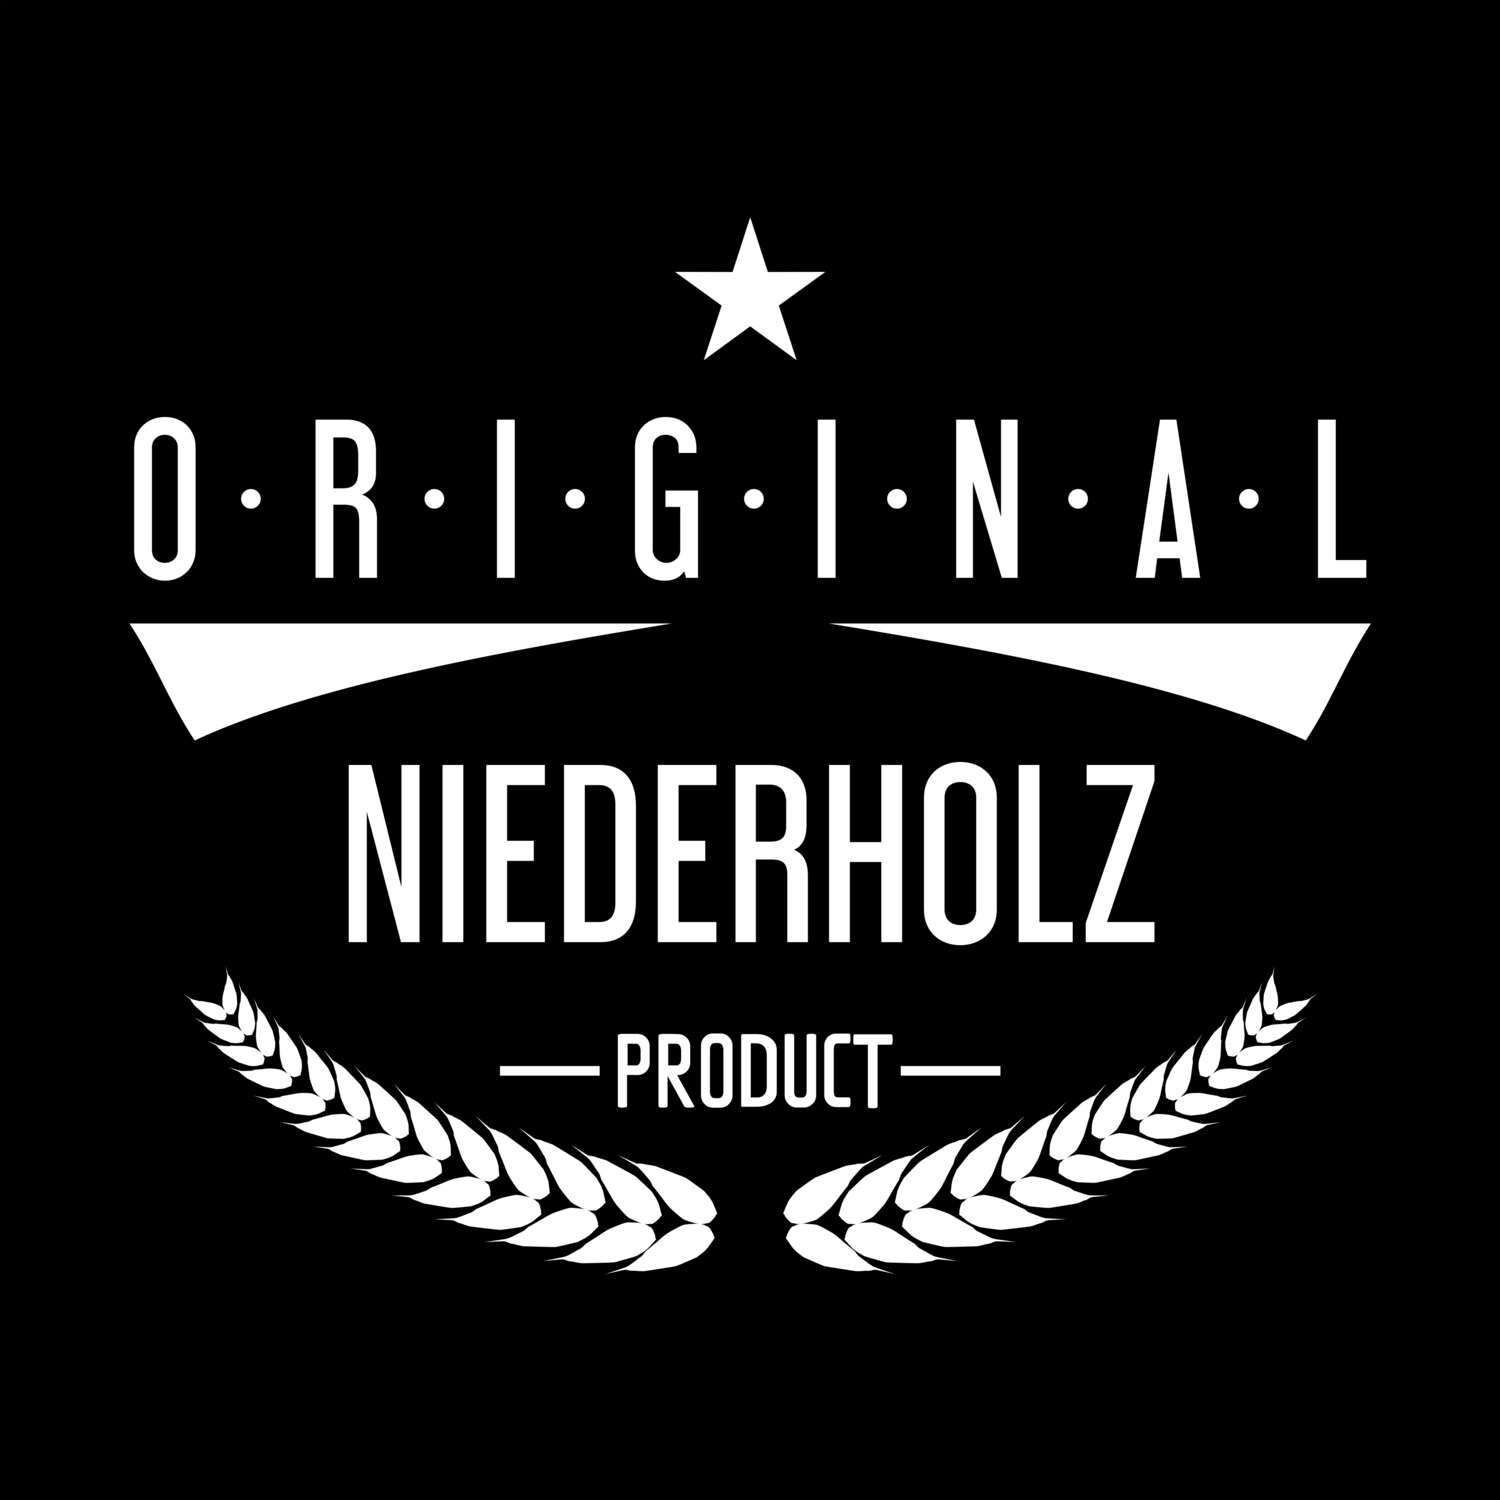 Niederholz T-Shirt »Original Product«